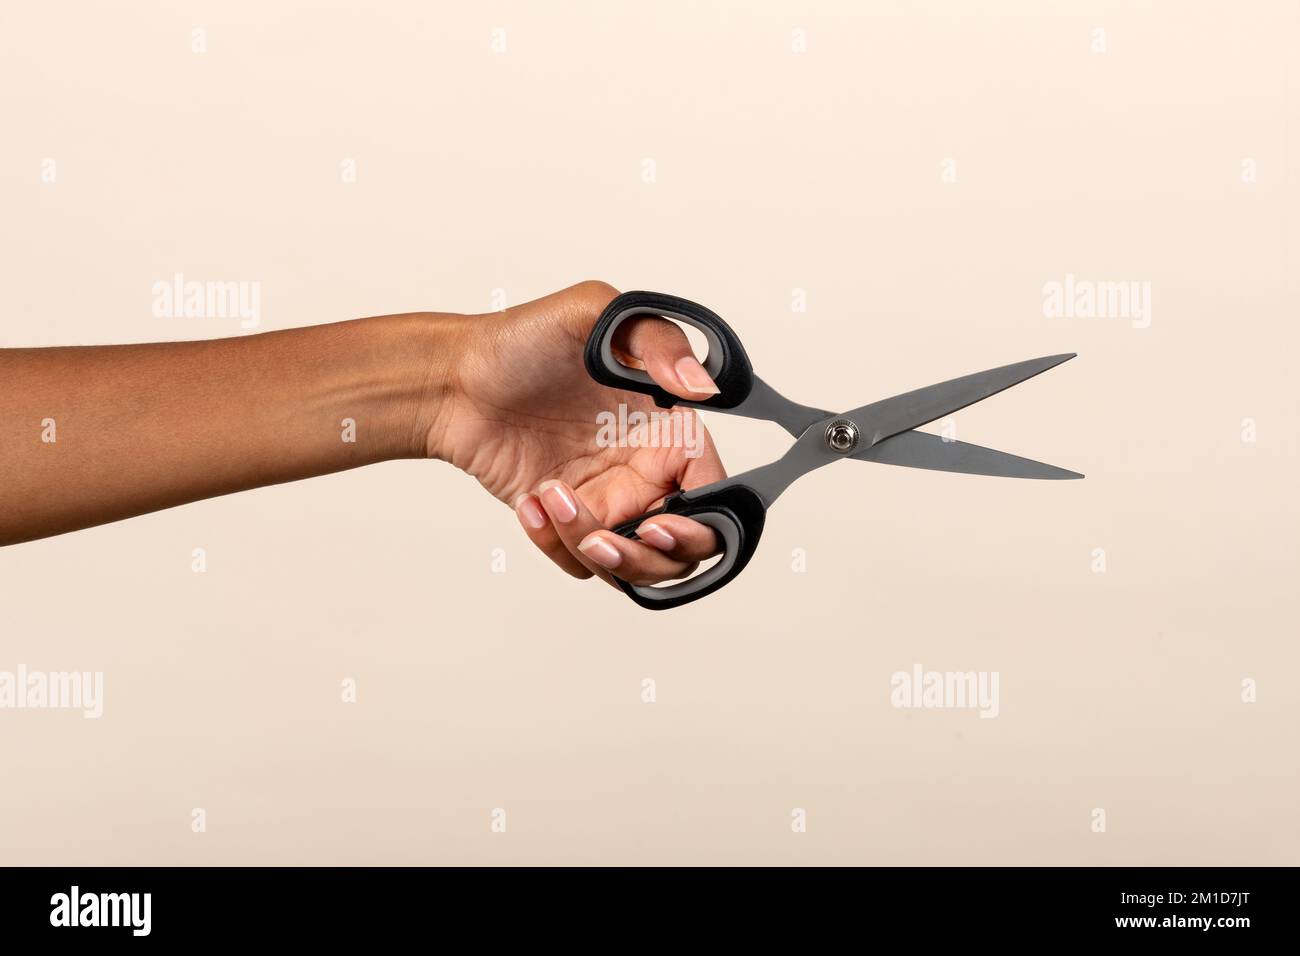 Crop anonymous African American female showing metal scissors on beige background in studio Stock Photo